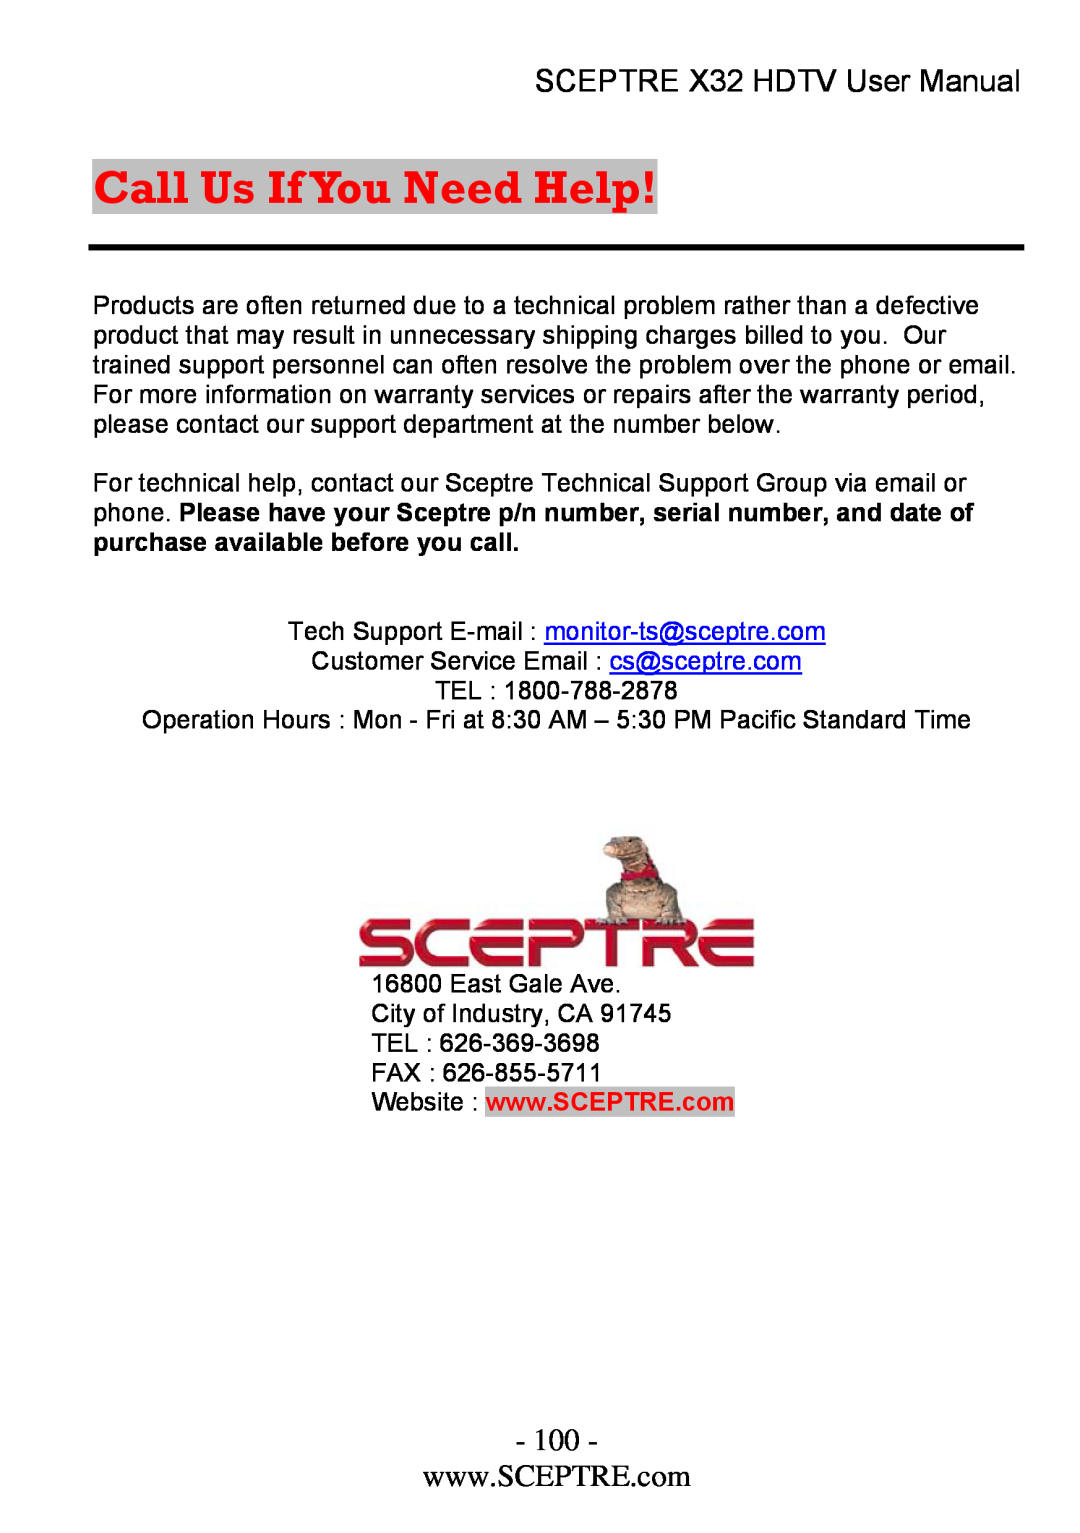 Sceptre Technologies x32 user manual Call Us If You Need Help, SCEPTRE X32 HDTV User Manual 